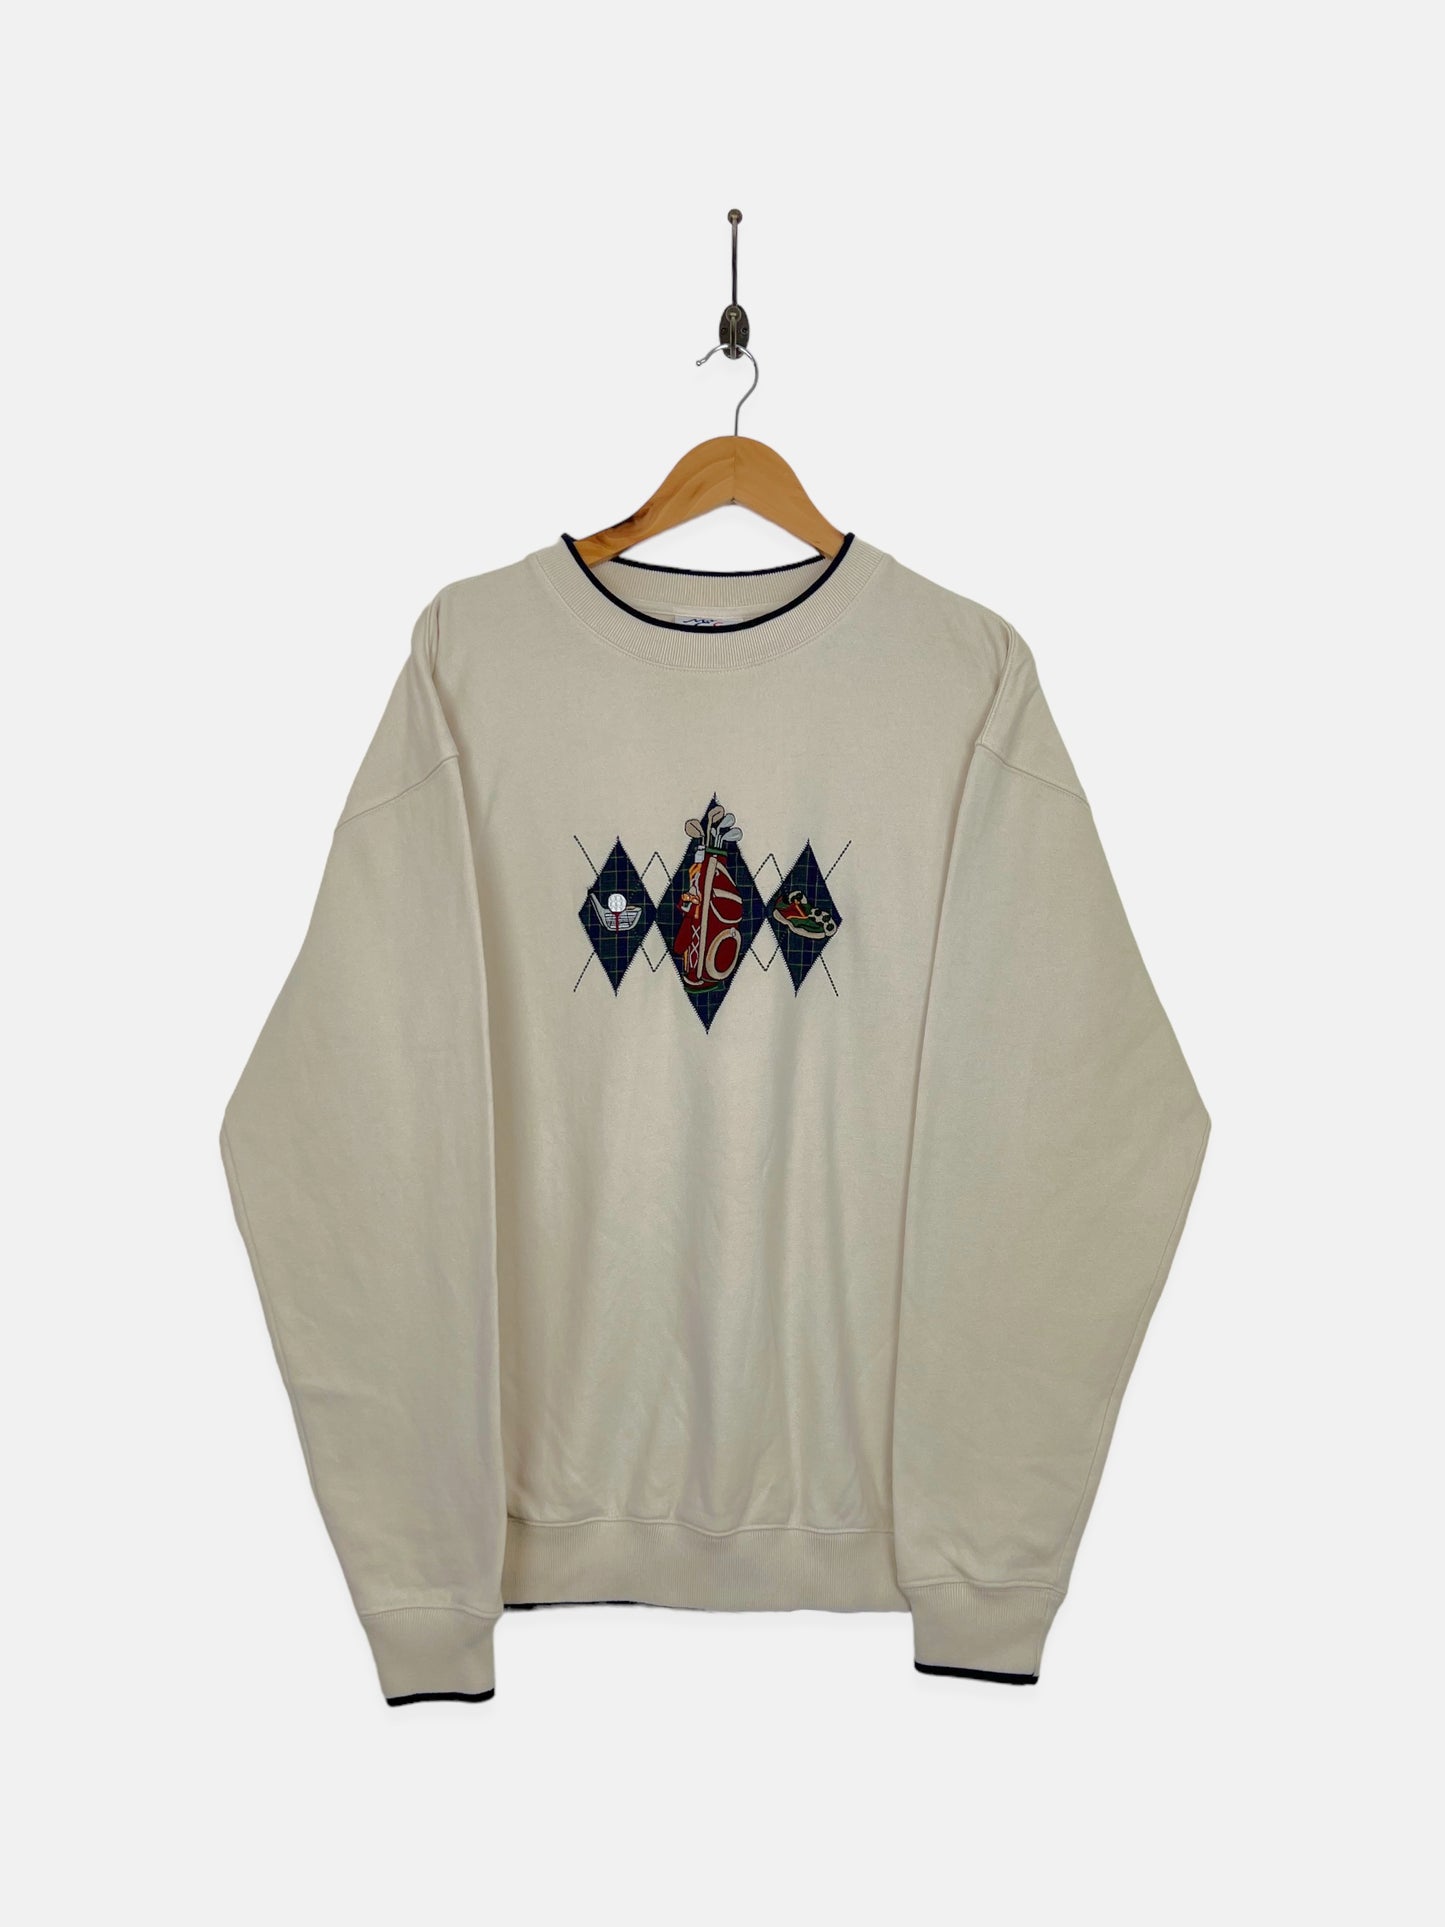 90's Golf Embroidered Vintage Sweatshirt Size L